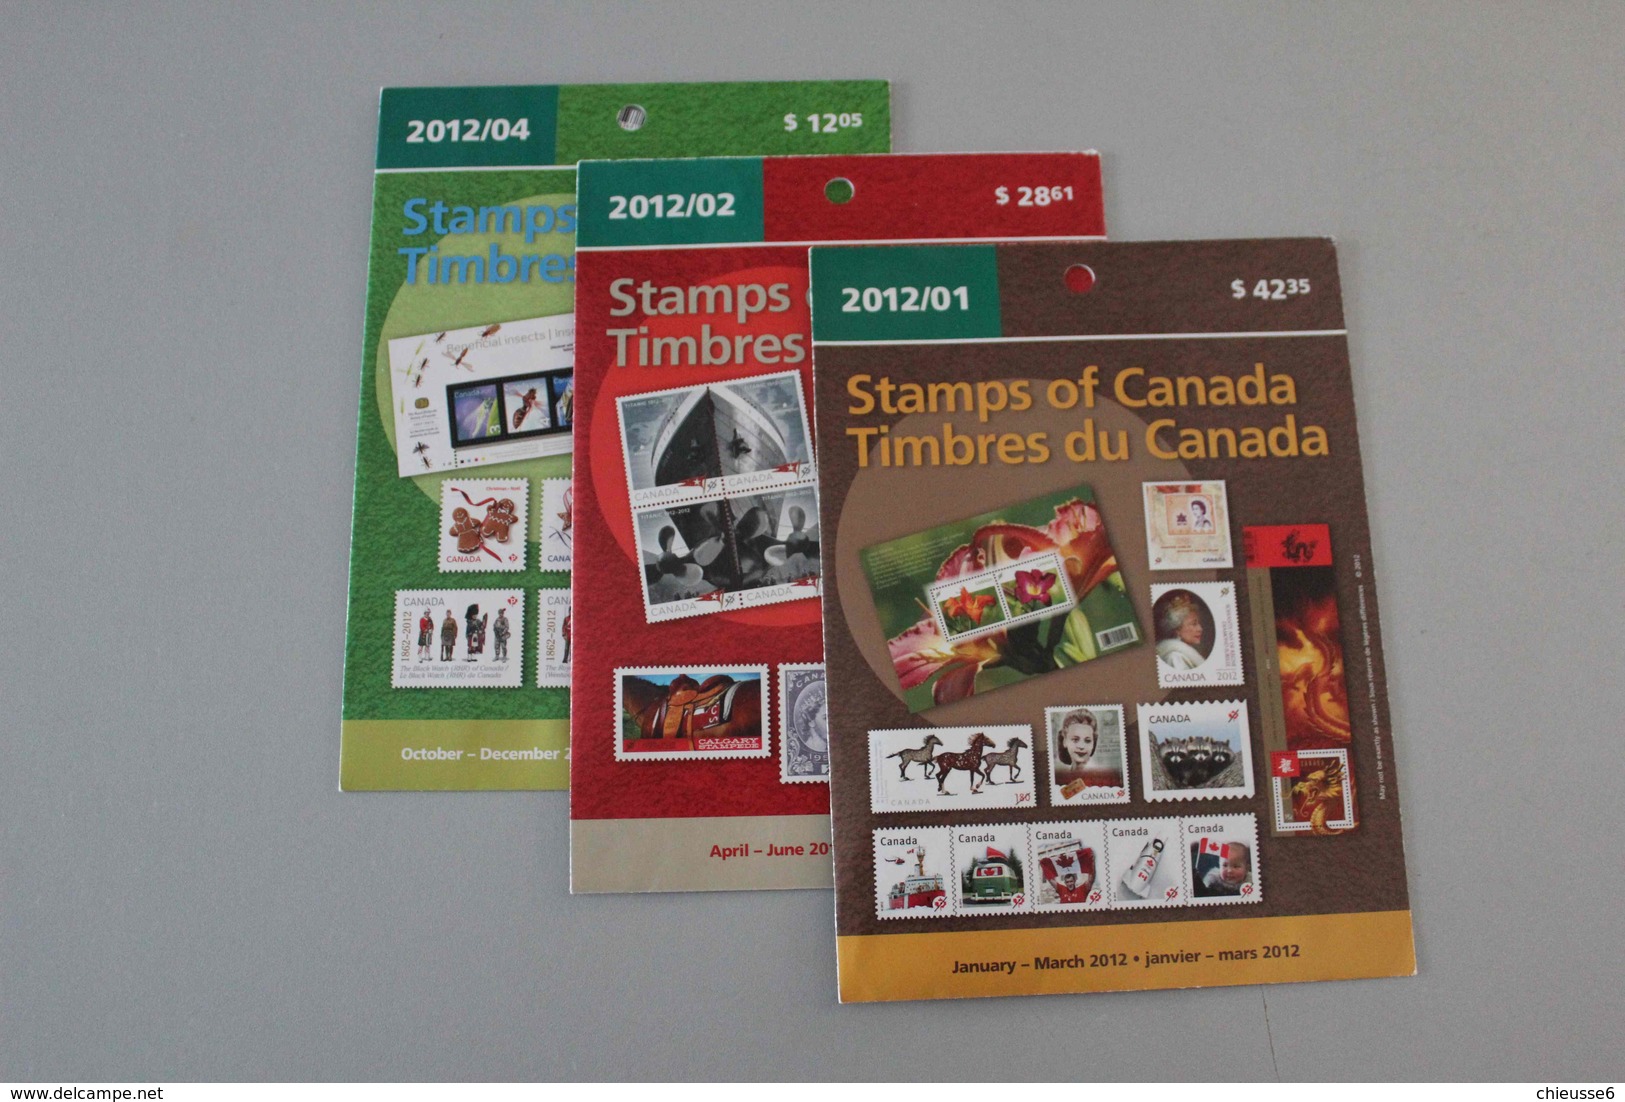 Canada - Année 2012 Manque La Pochette N° 3 - Canada Post Year Sets/merchandise